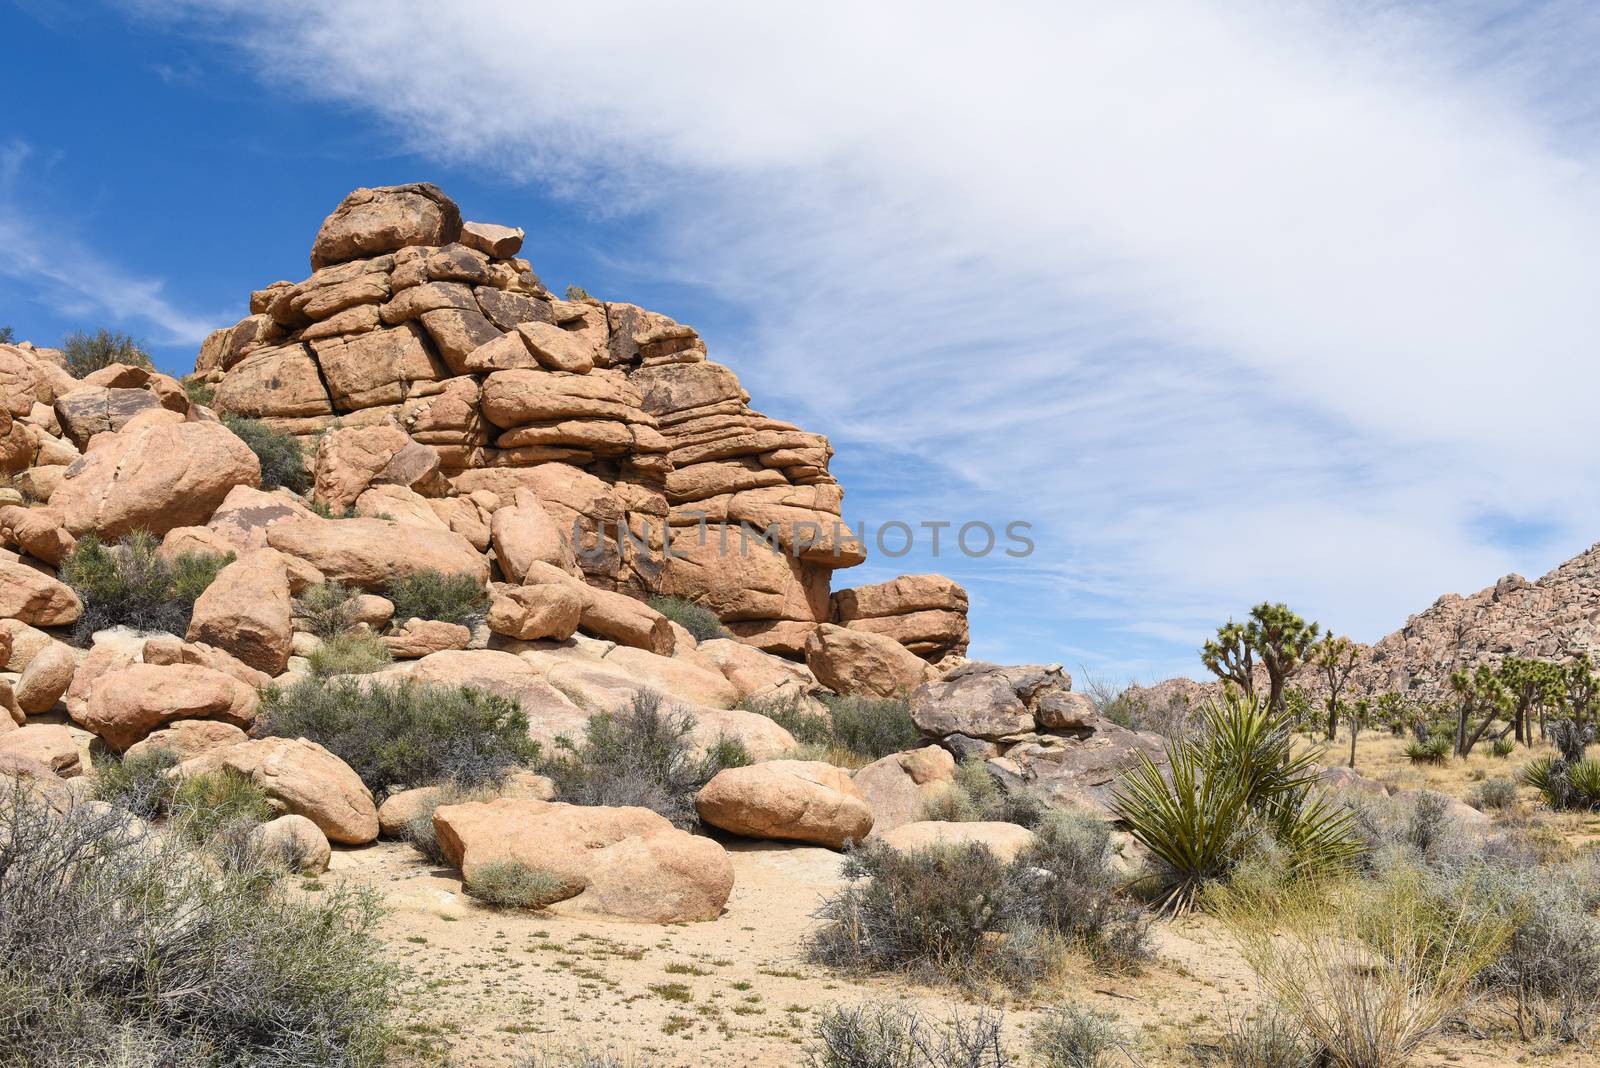 Pile of granite boulders along Boy Scout Trail in Joshua Tree National Park, California